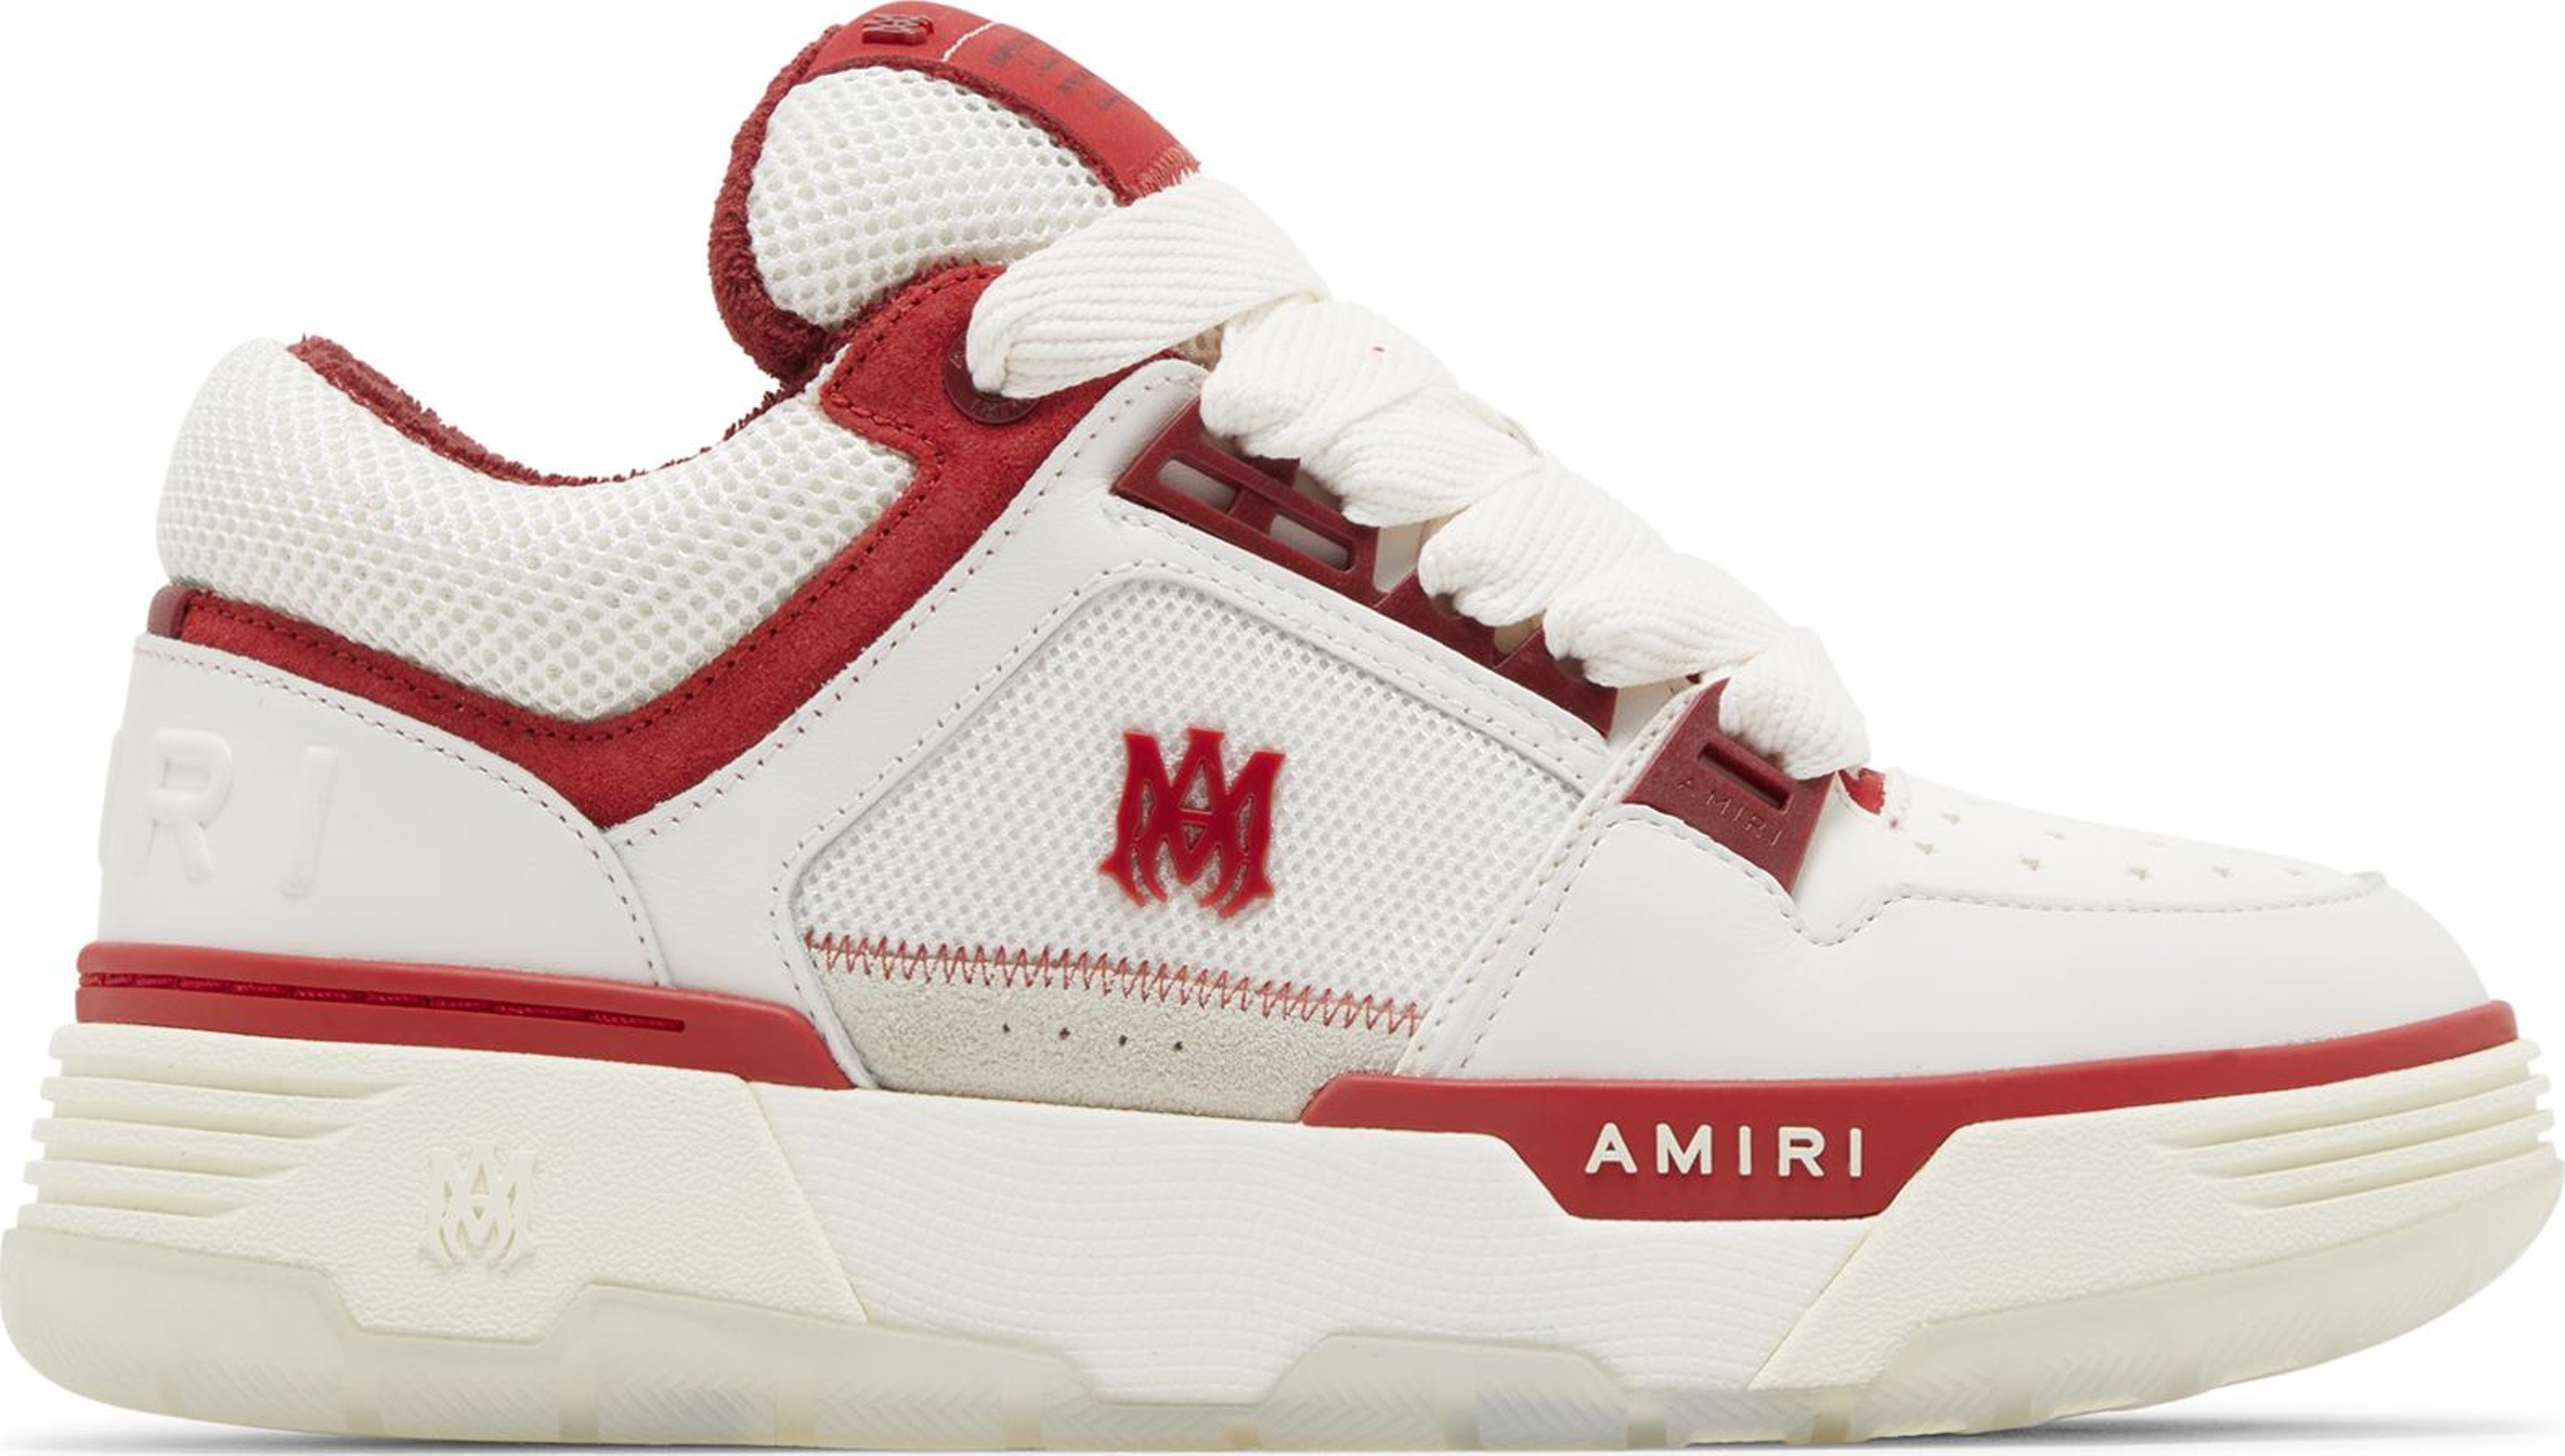 Buy Amiri MA-1 'White Red' - PF23MFS010 124 | GOAT